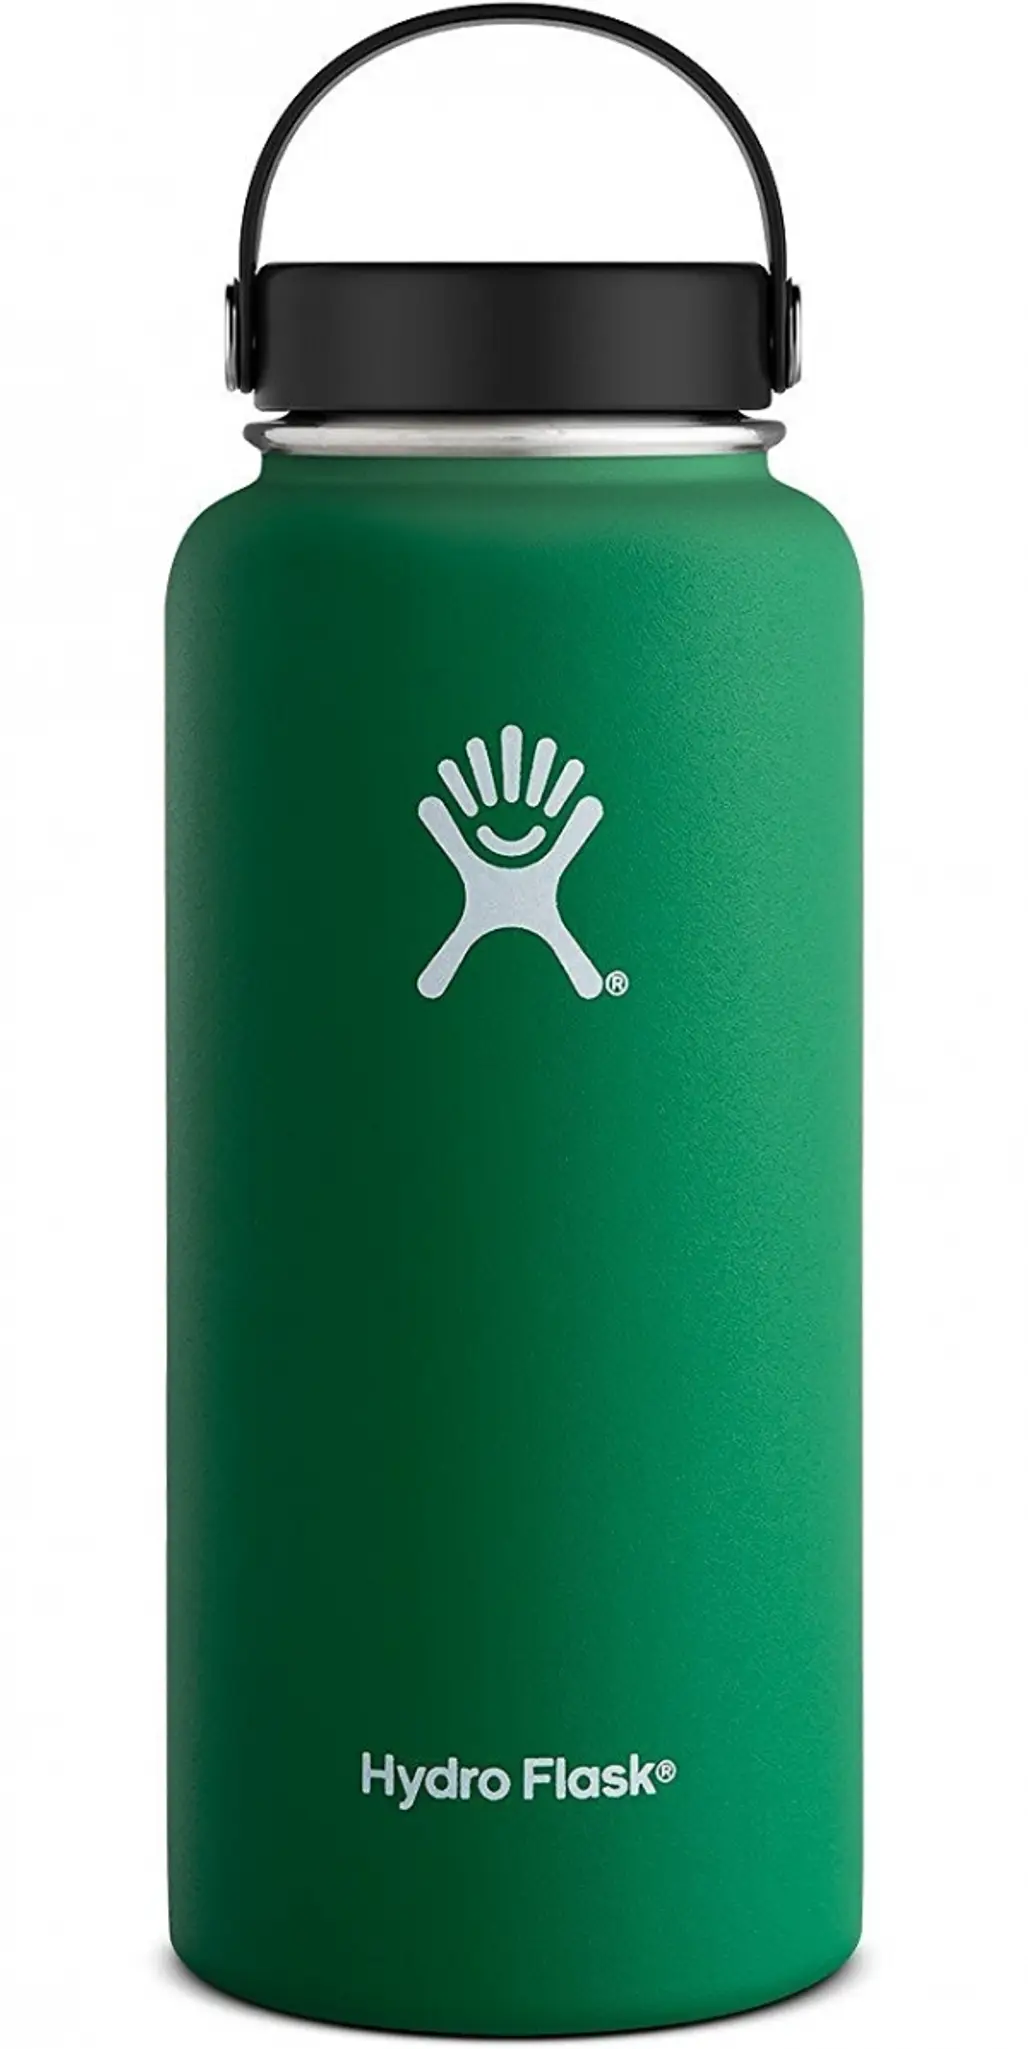 Hydro Flask,green,bottle,drinkware,product,